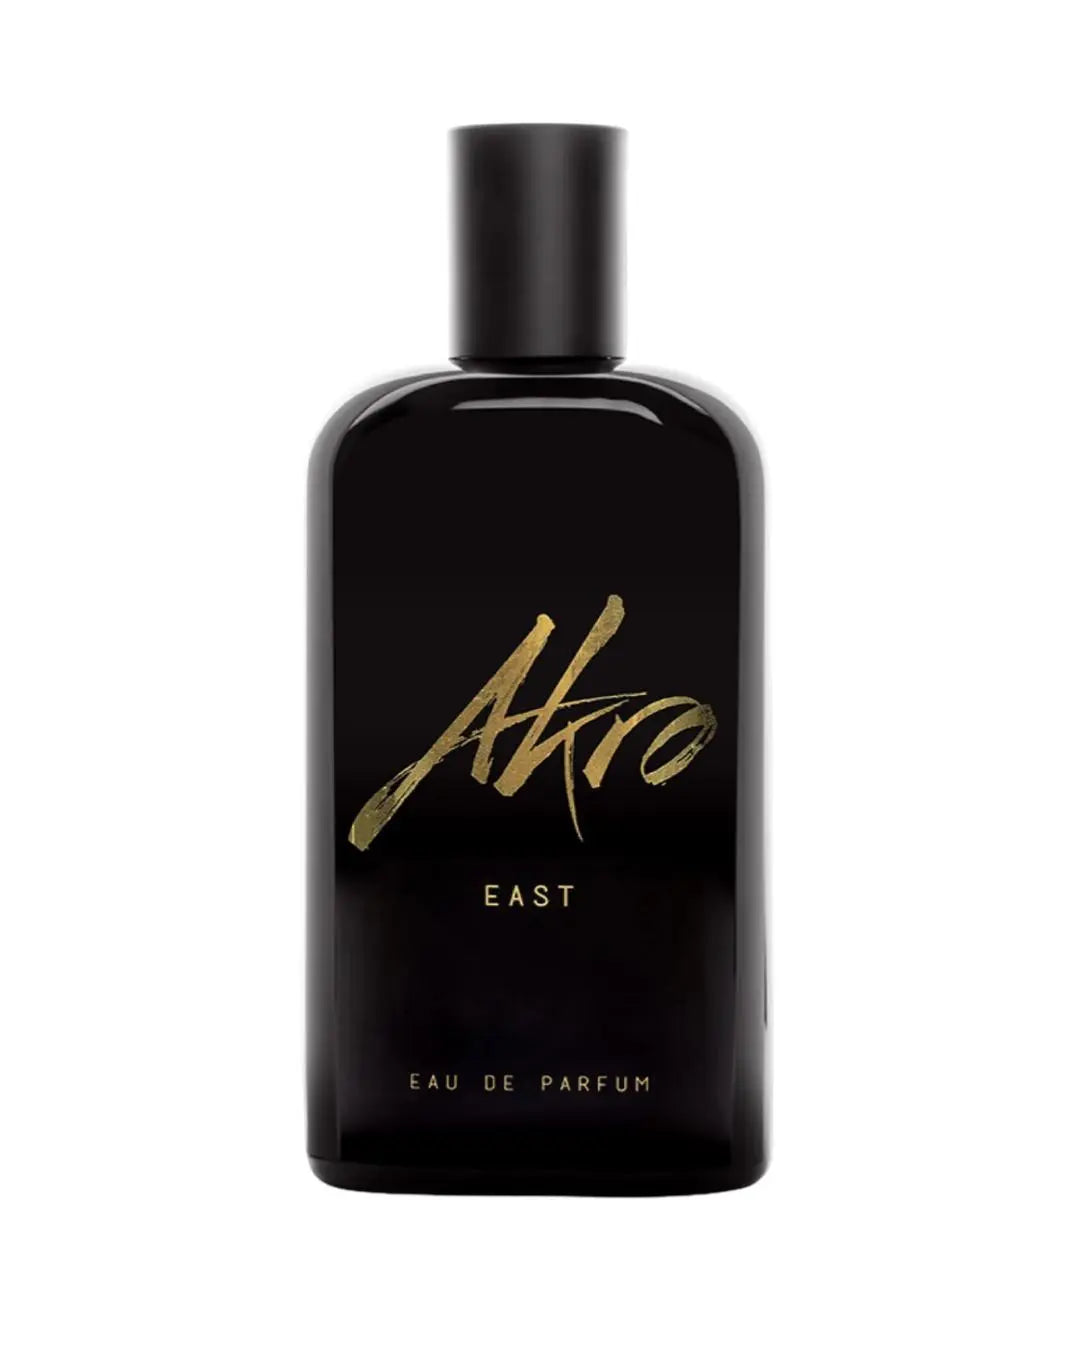 Akro East - 30ml eau de parfum